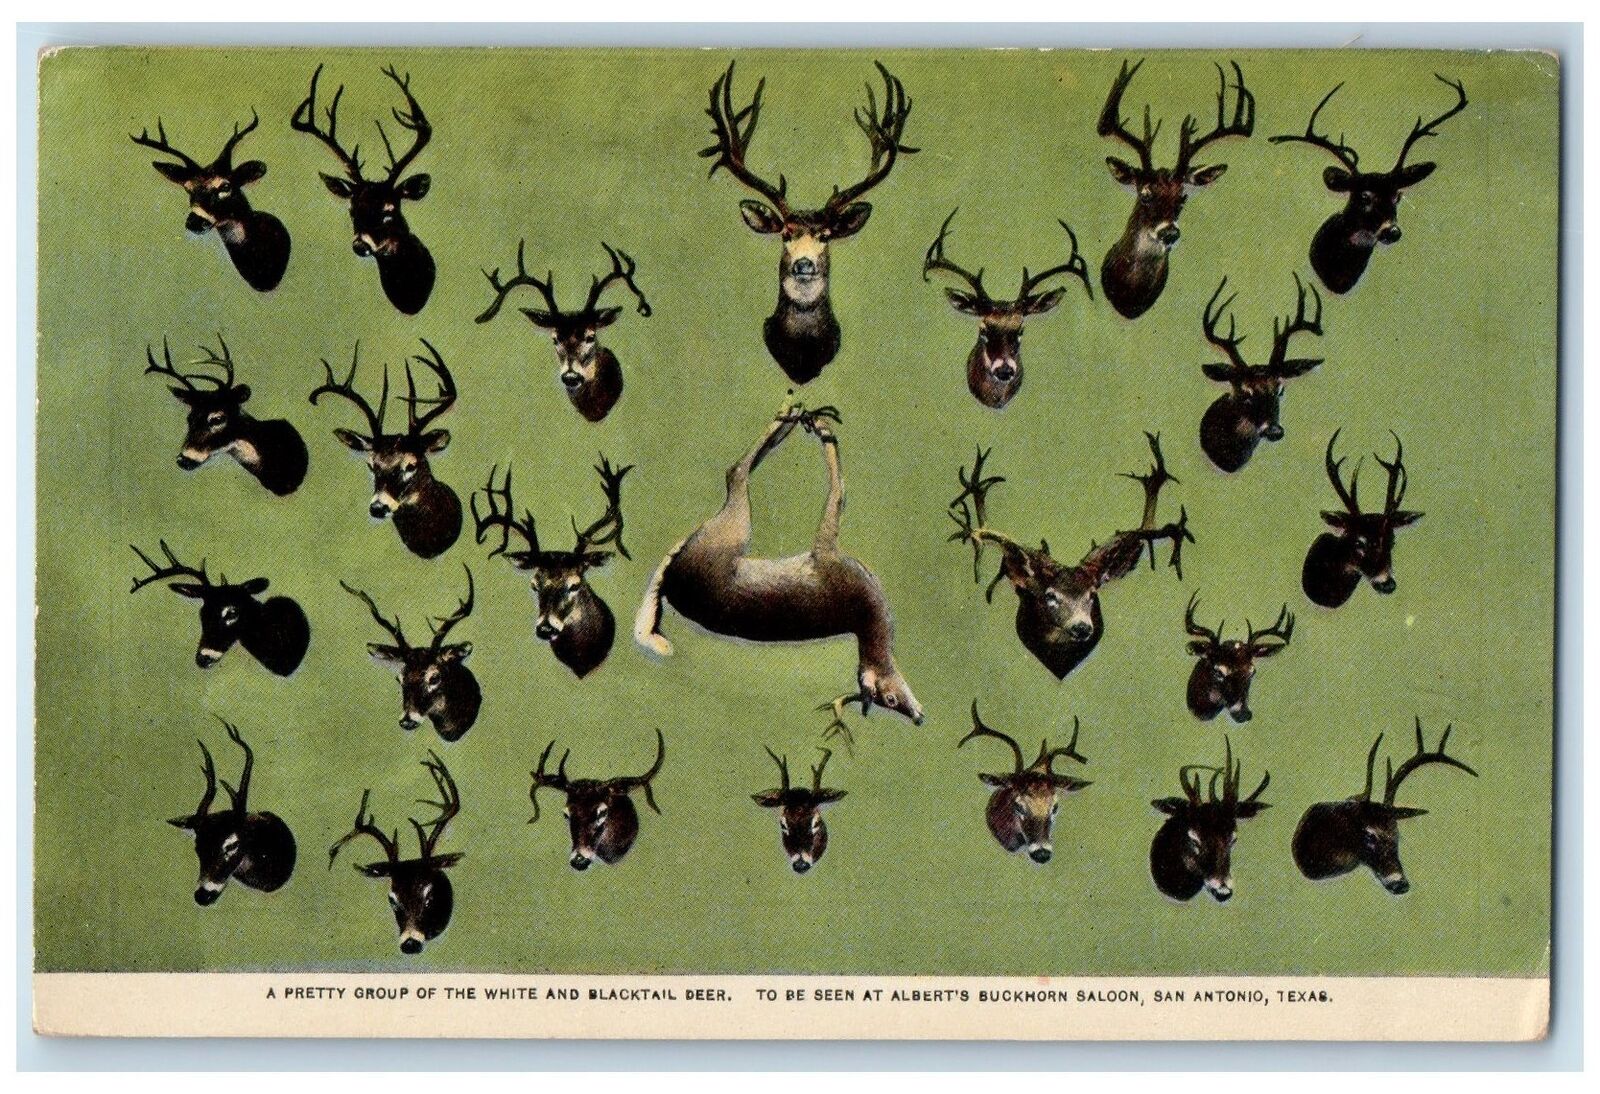 c1920 White & Blacktail Deer Alberts Buckhorn Saloon San Antonio Texas Postcard